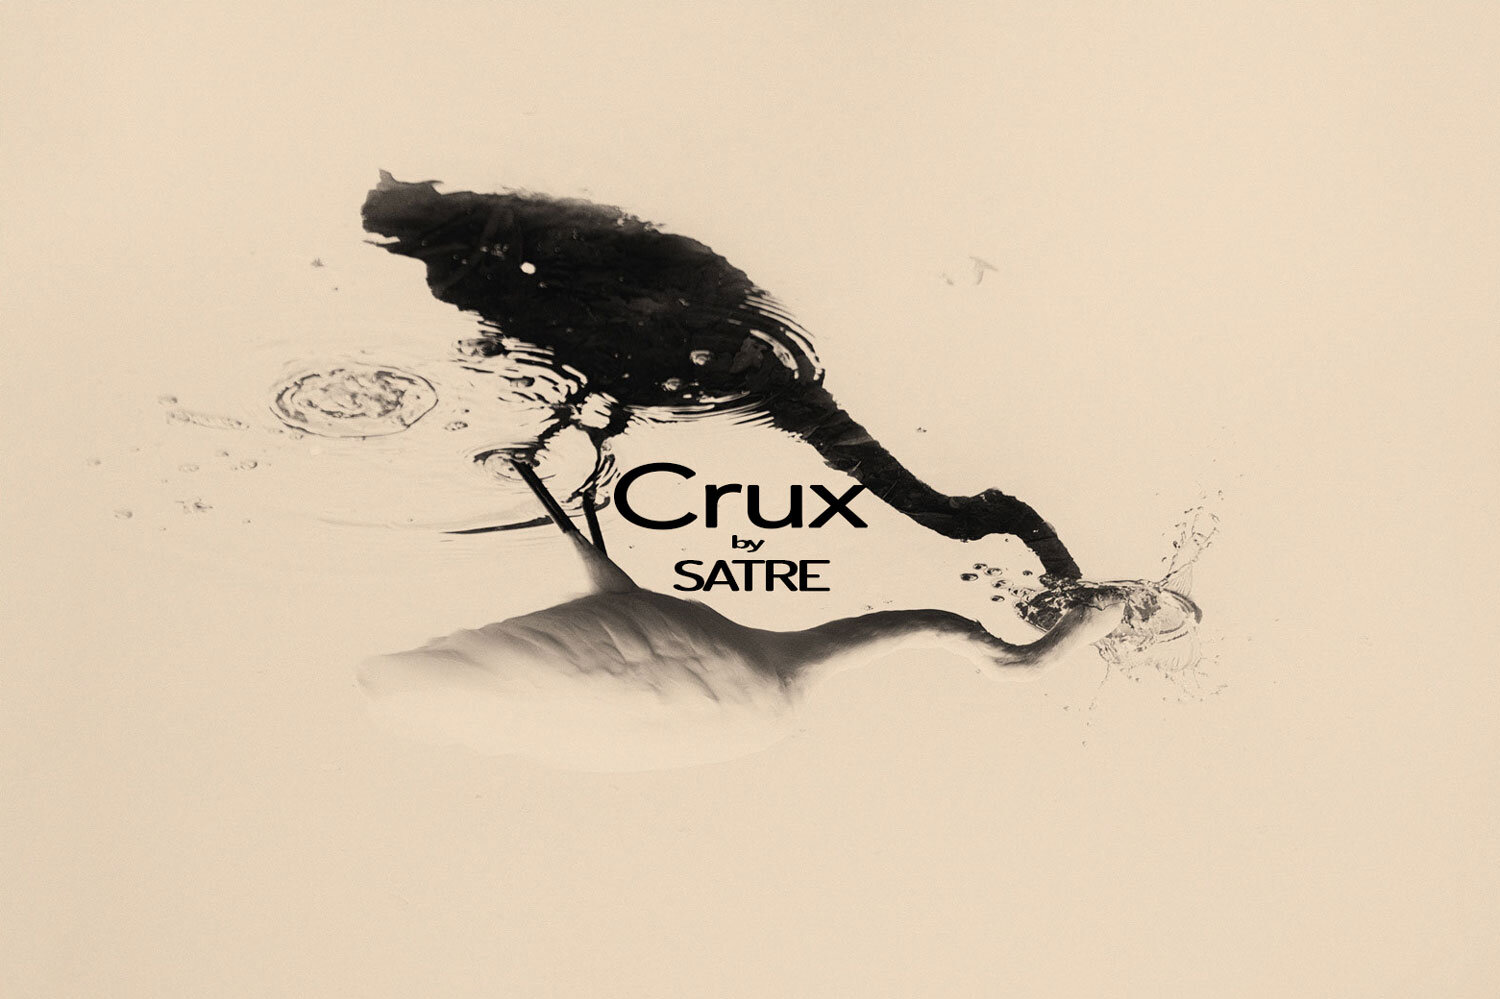 Crux-front-1500-geir-satre.jpg